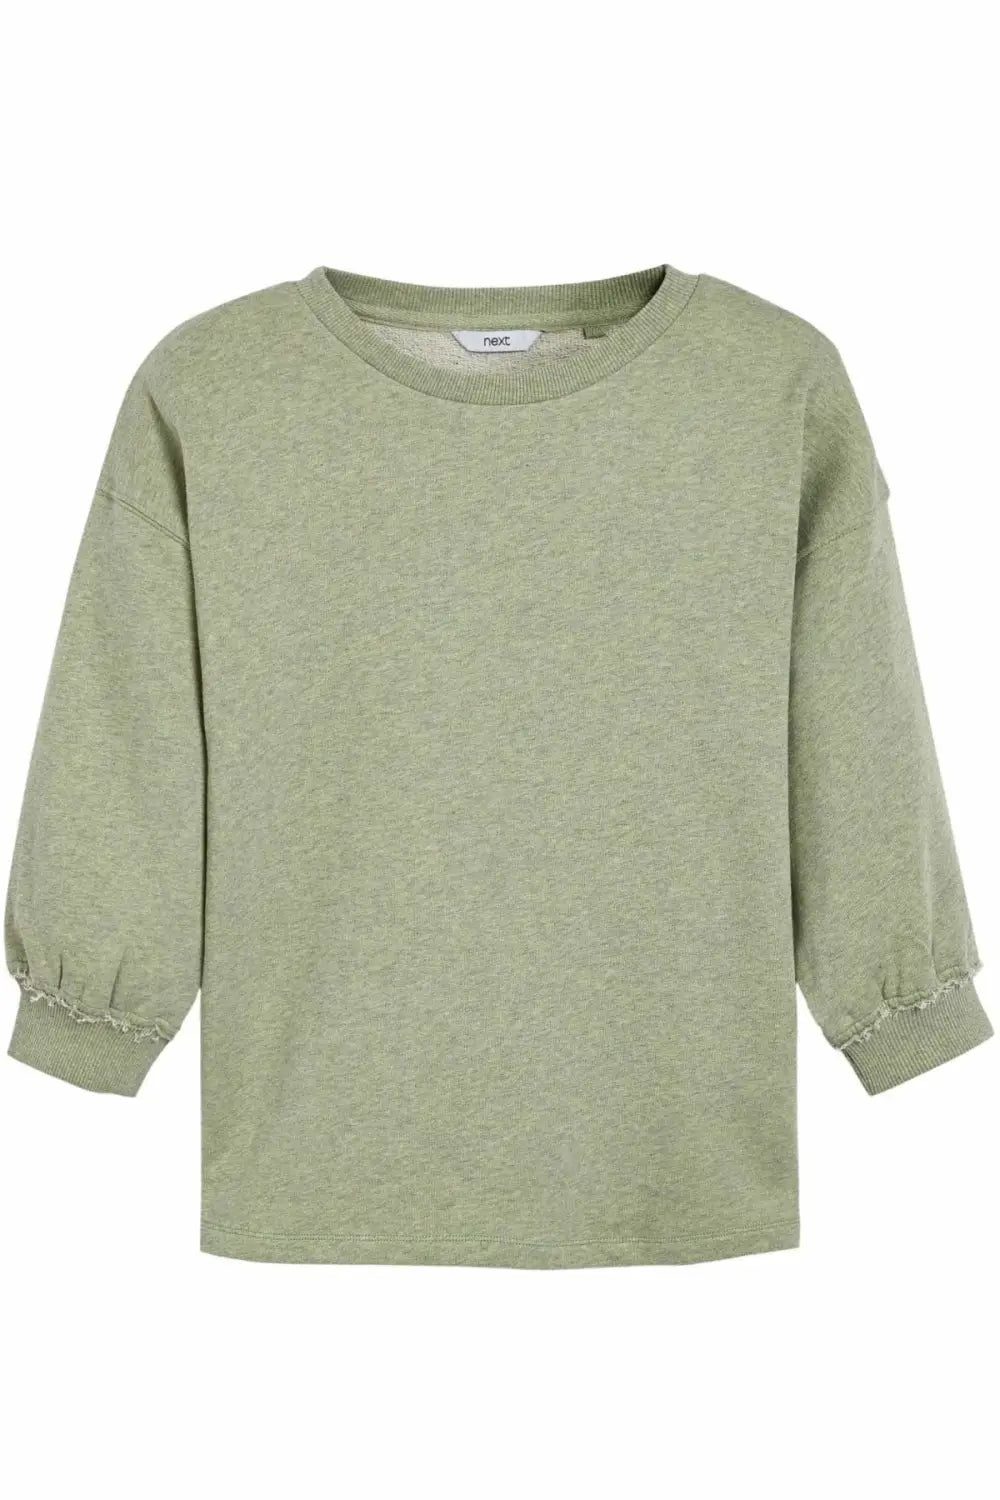 Secret Label Oversize 3/4 Sleeve Sweatshirt